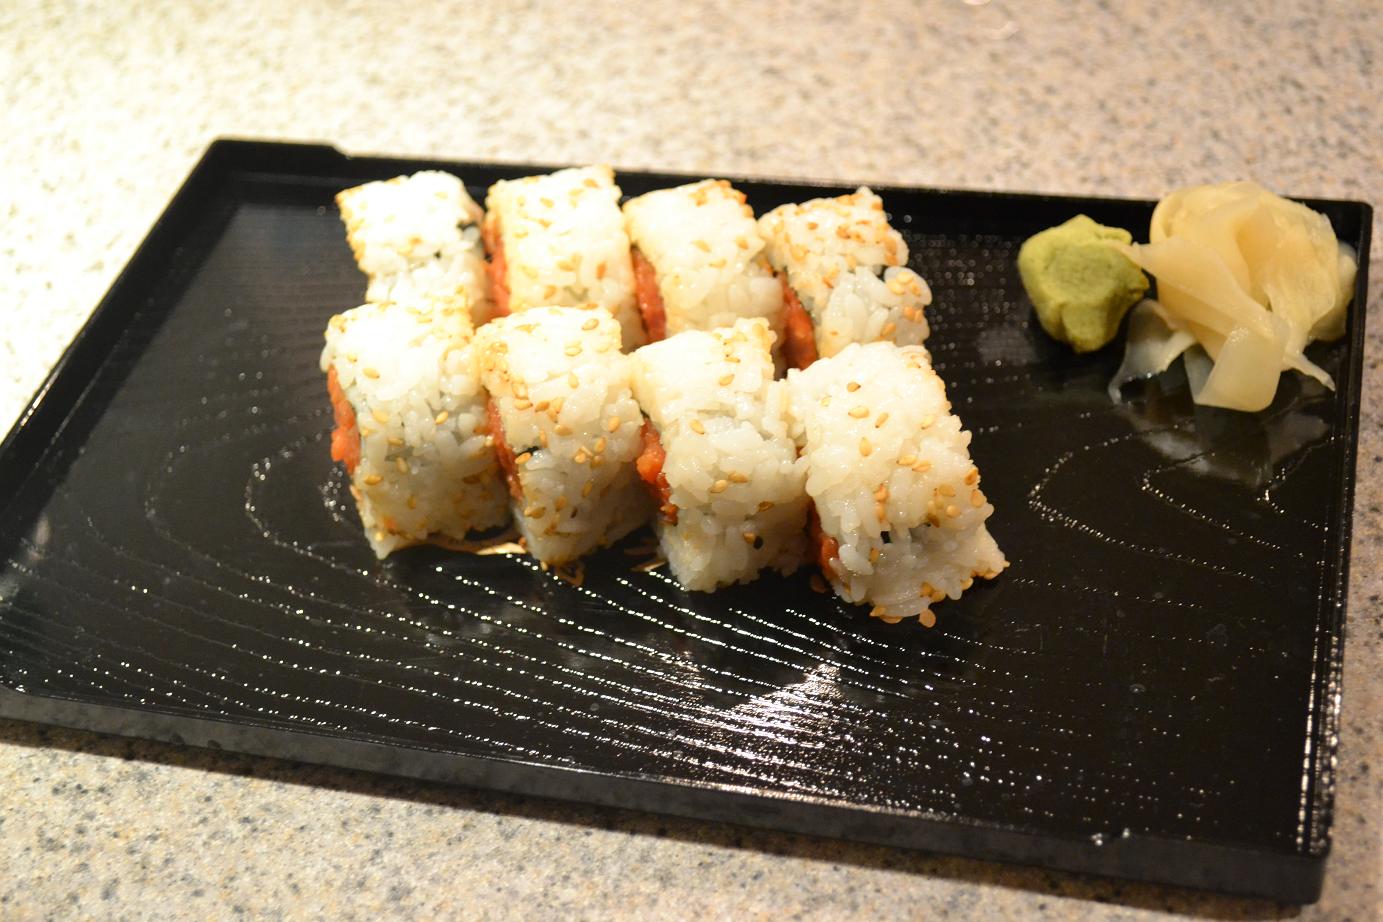 Omakase Please Spicy Tuna Roll